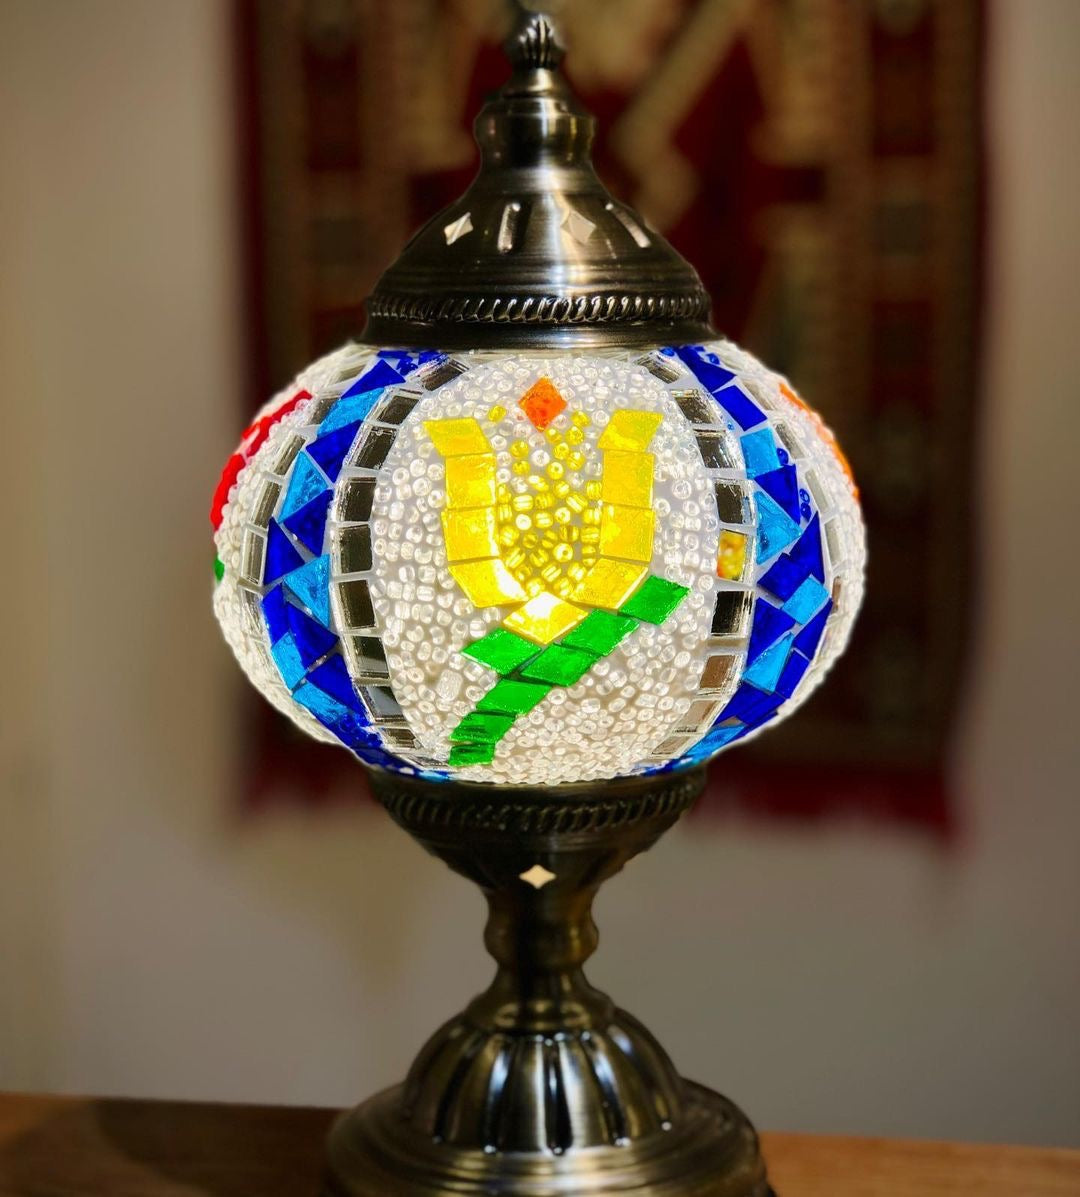 Turkish mosaic lamp with yellow tulip pattern on it